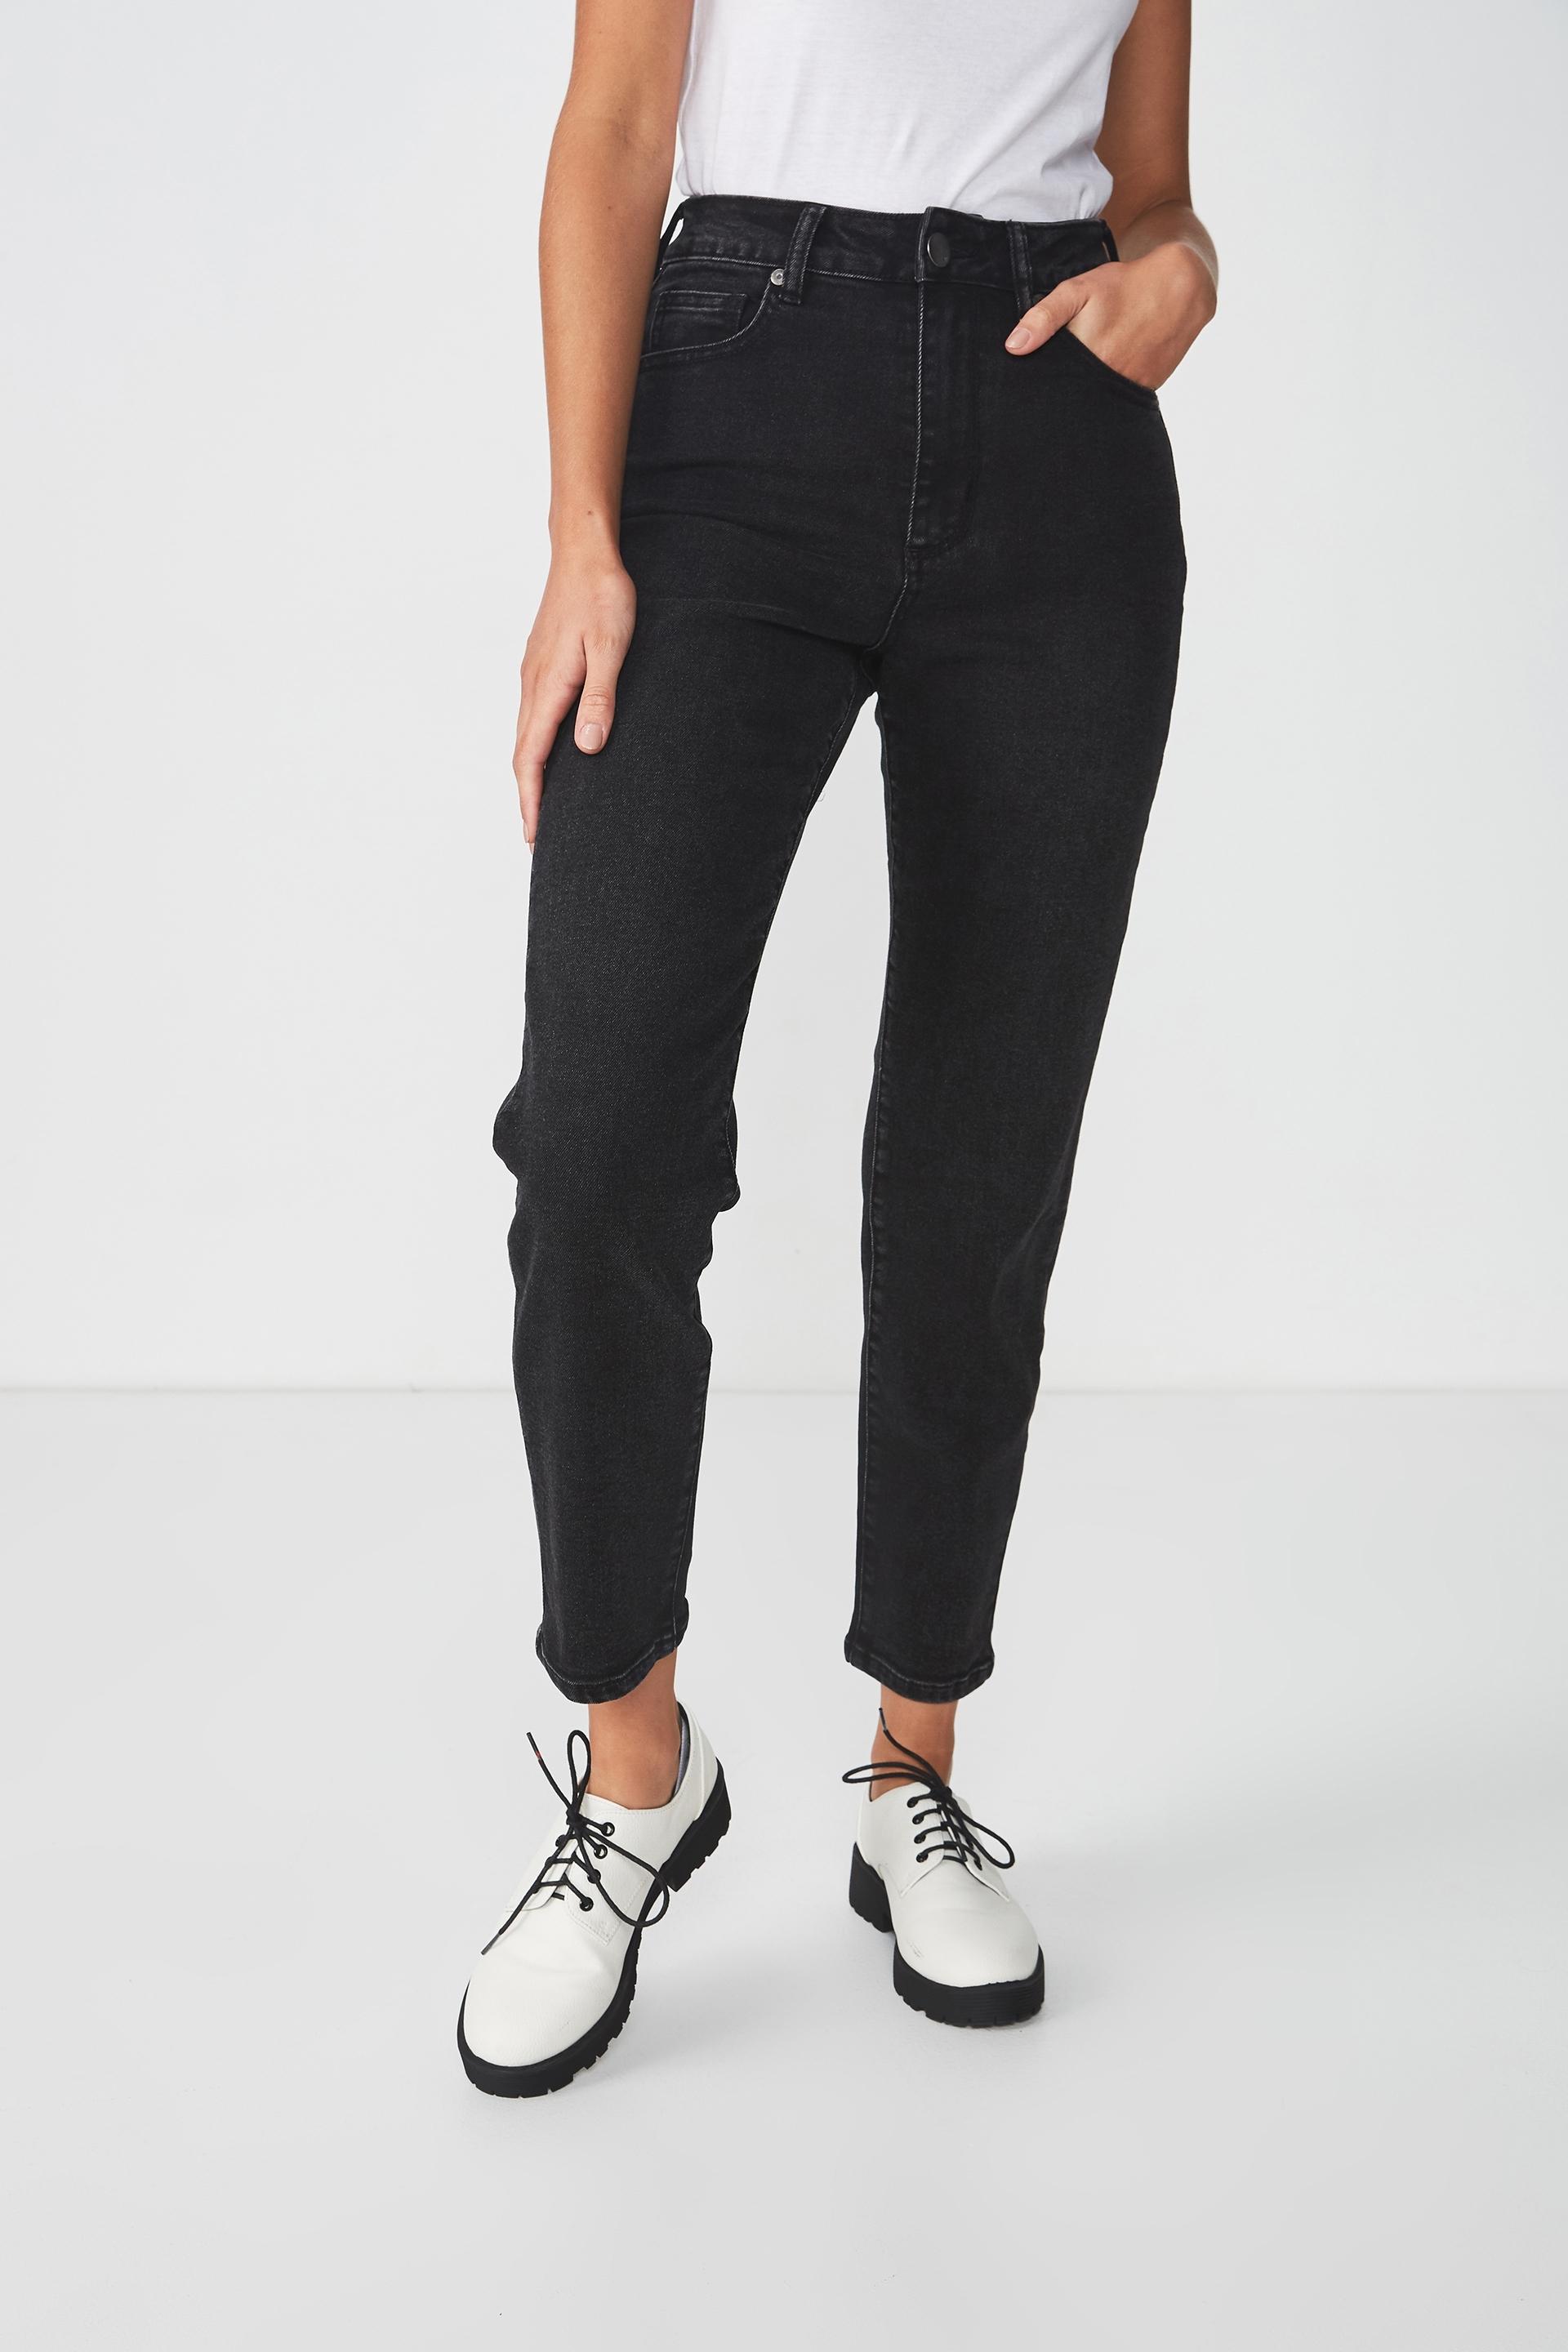 Stretch mom jeans - stonewash black Cotton On Jeans | Superbalist.com